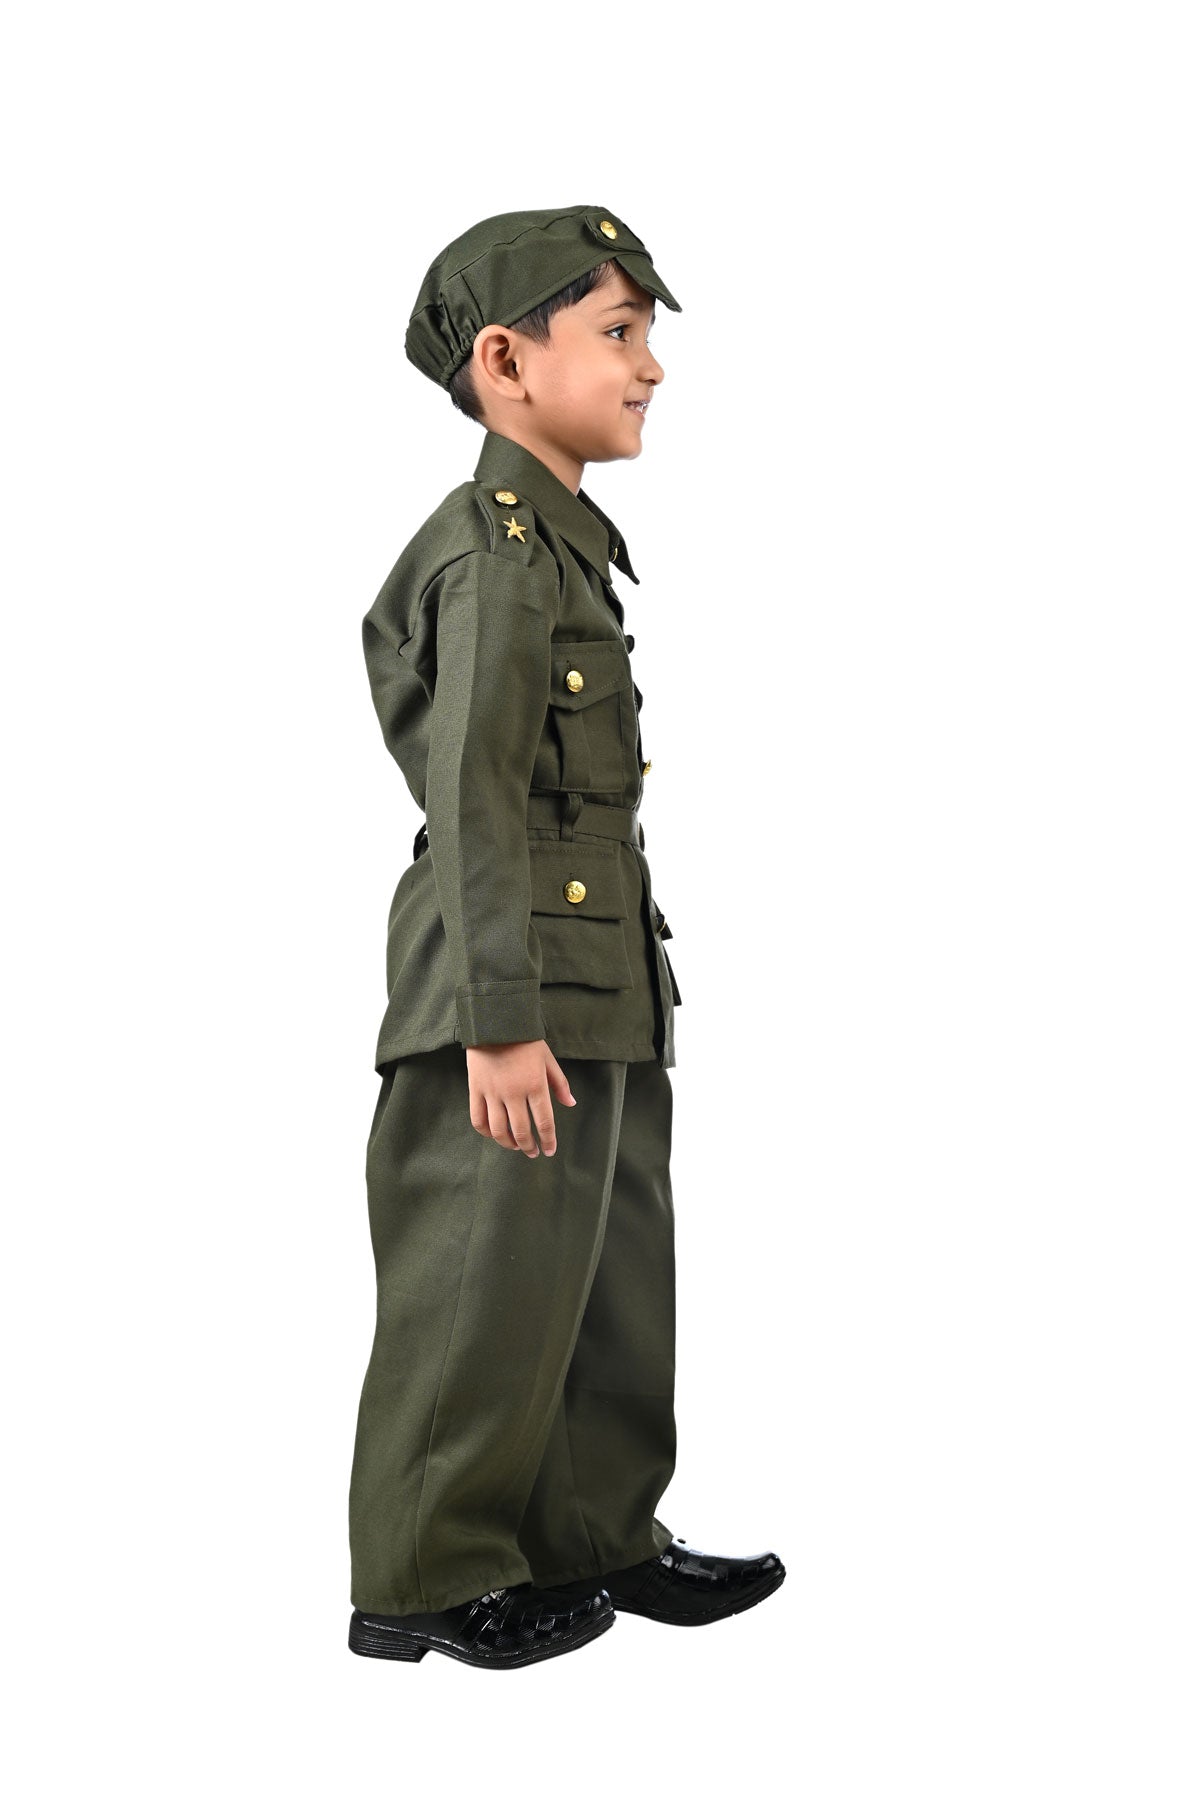 Serge Green Poly  Wool Issue Army Uniform Dress Pants  Etsy Hong Kong